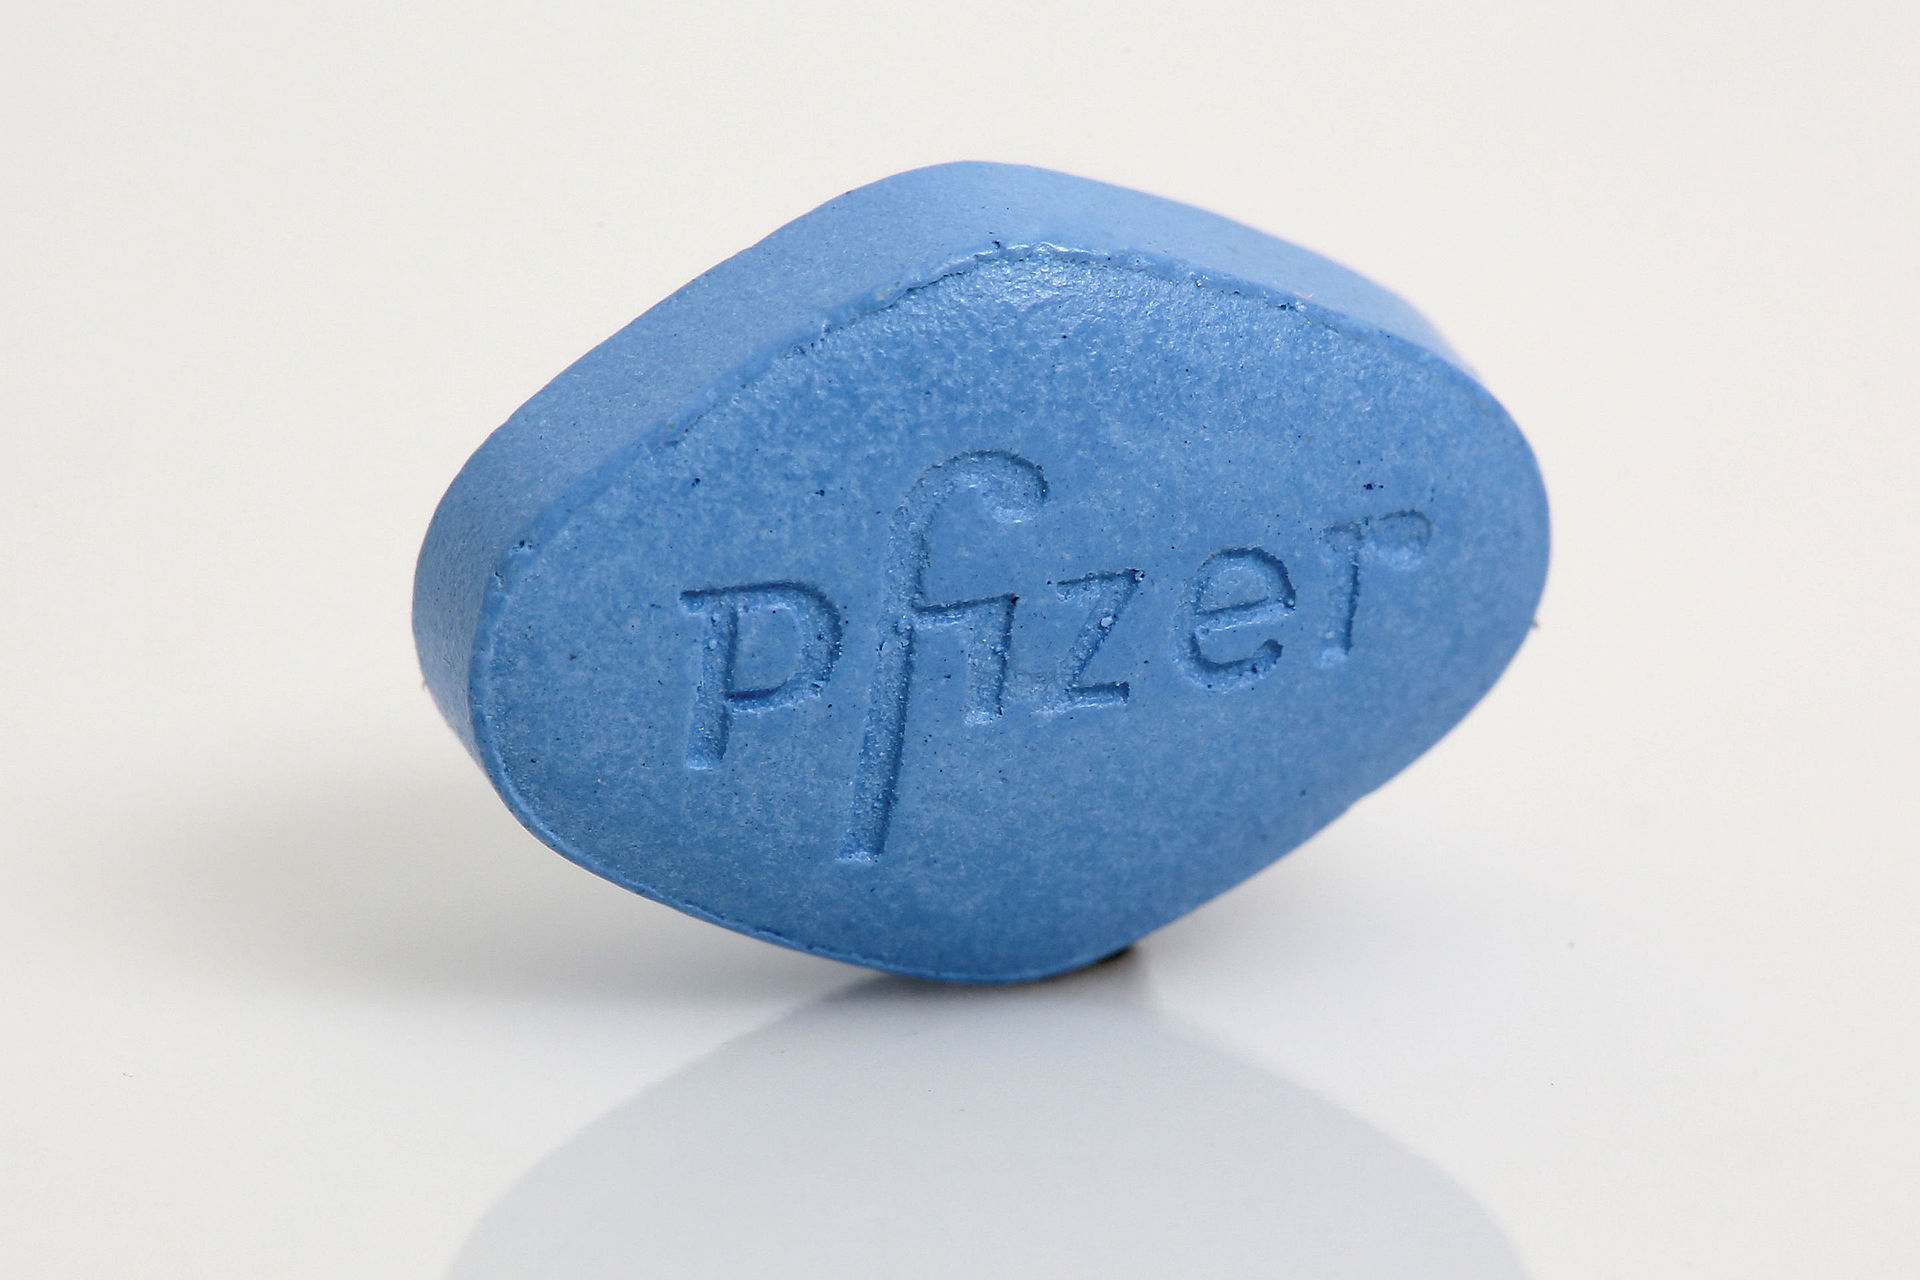 Die originelle blaue Pille – Viagra